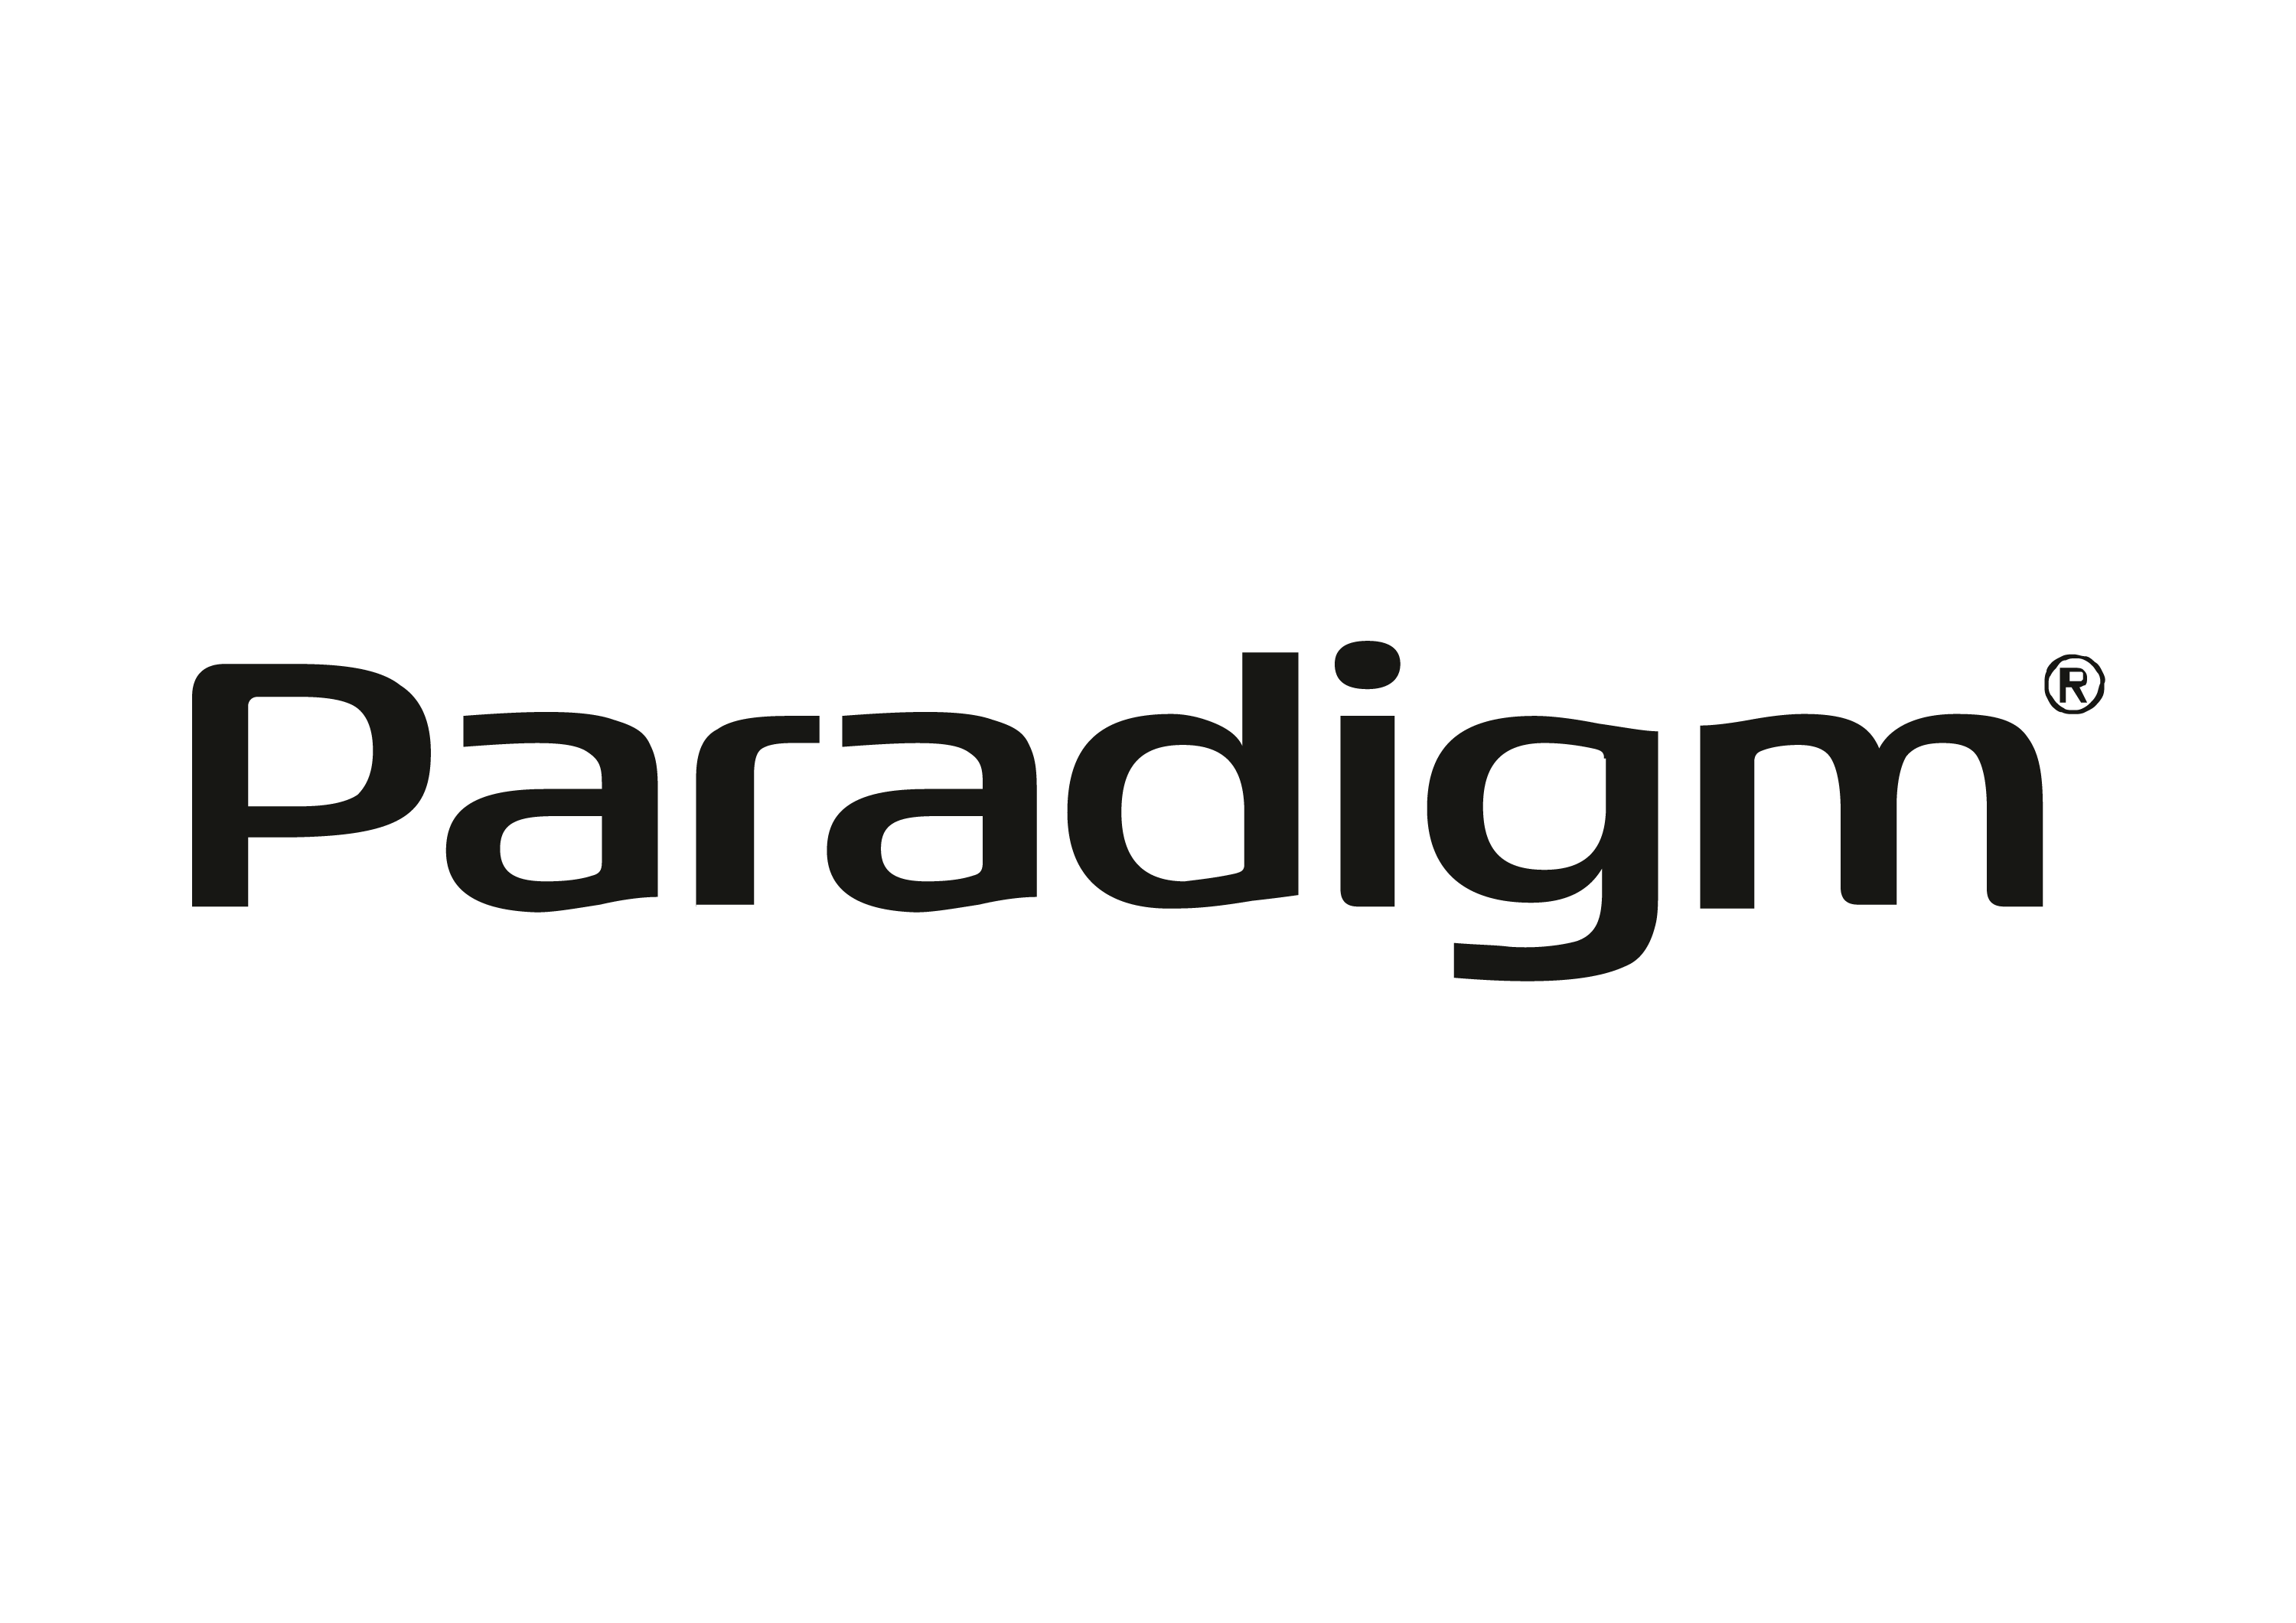 Paradigm Electronics Inc.